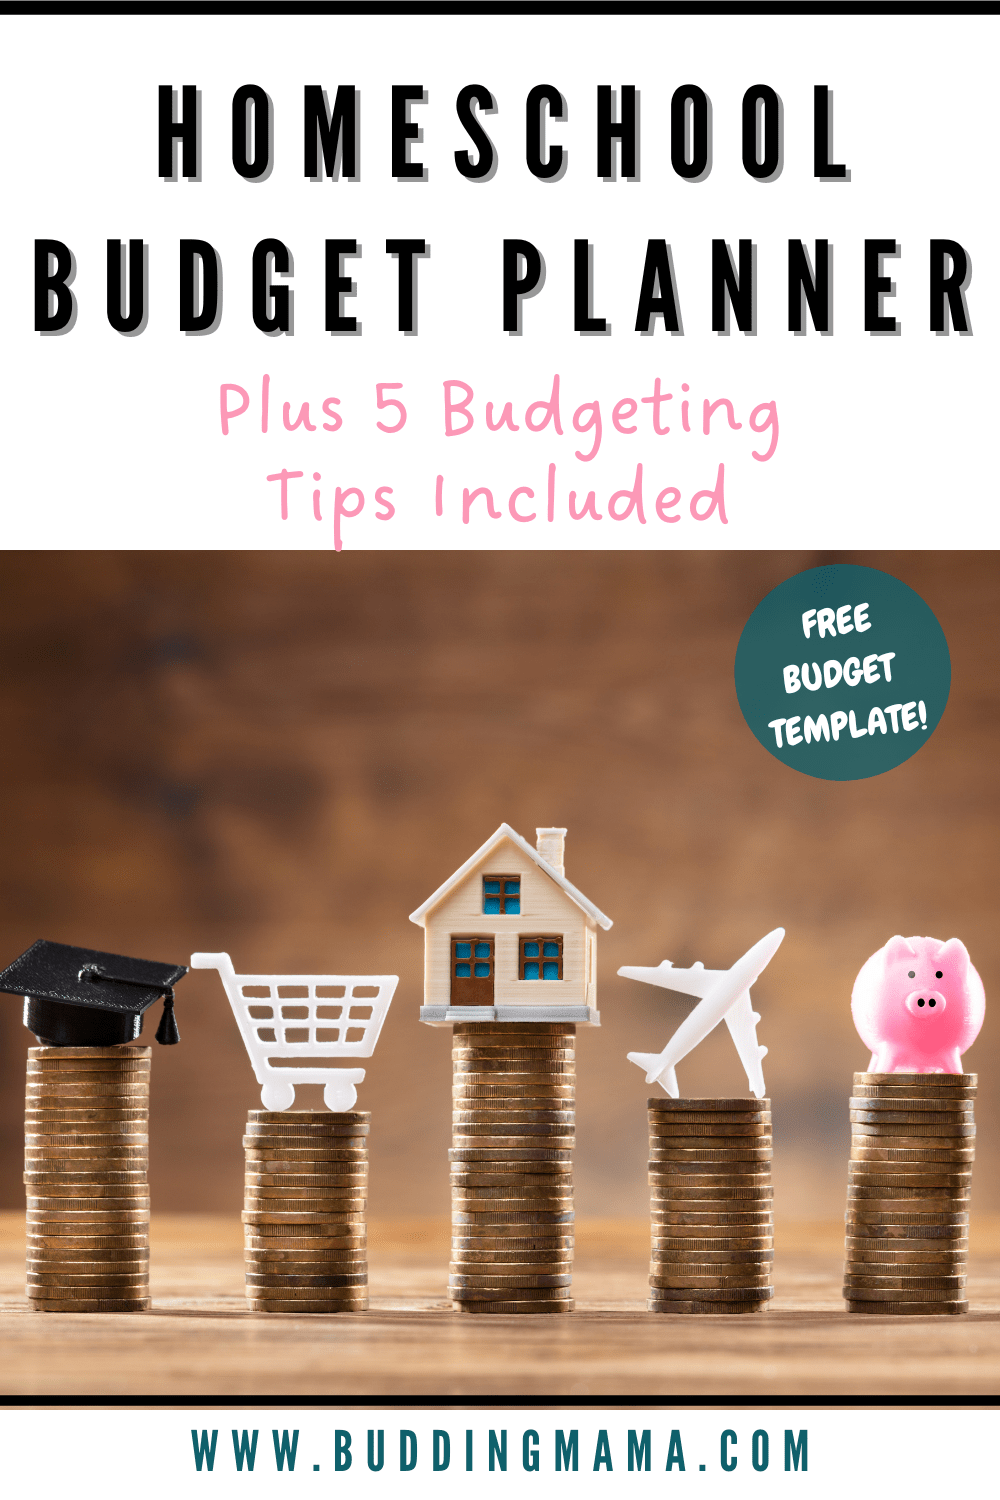 Homeschool Budget Planner & Tips Free Download Pin Budding Mama